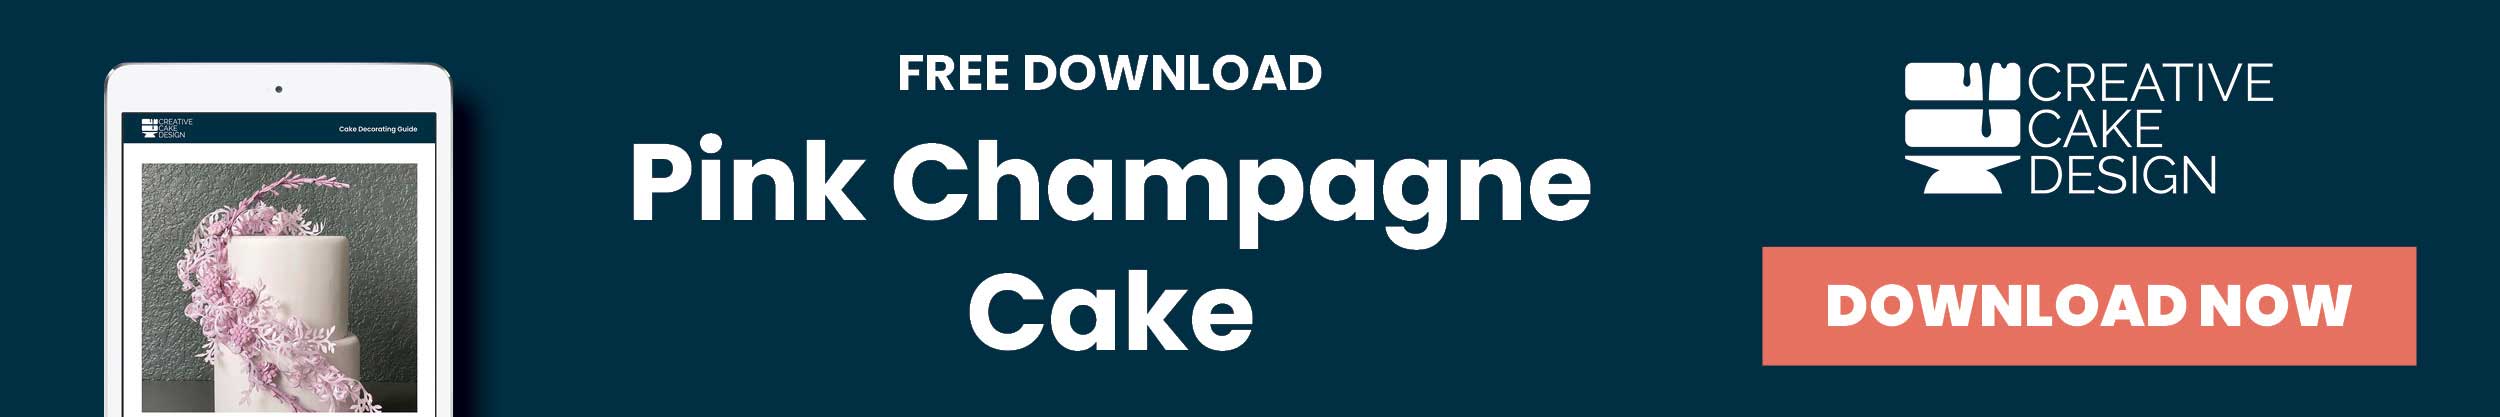 Download the free Champagne Cake Recipe